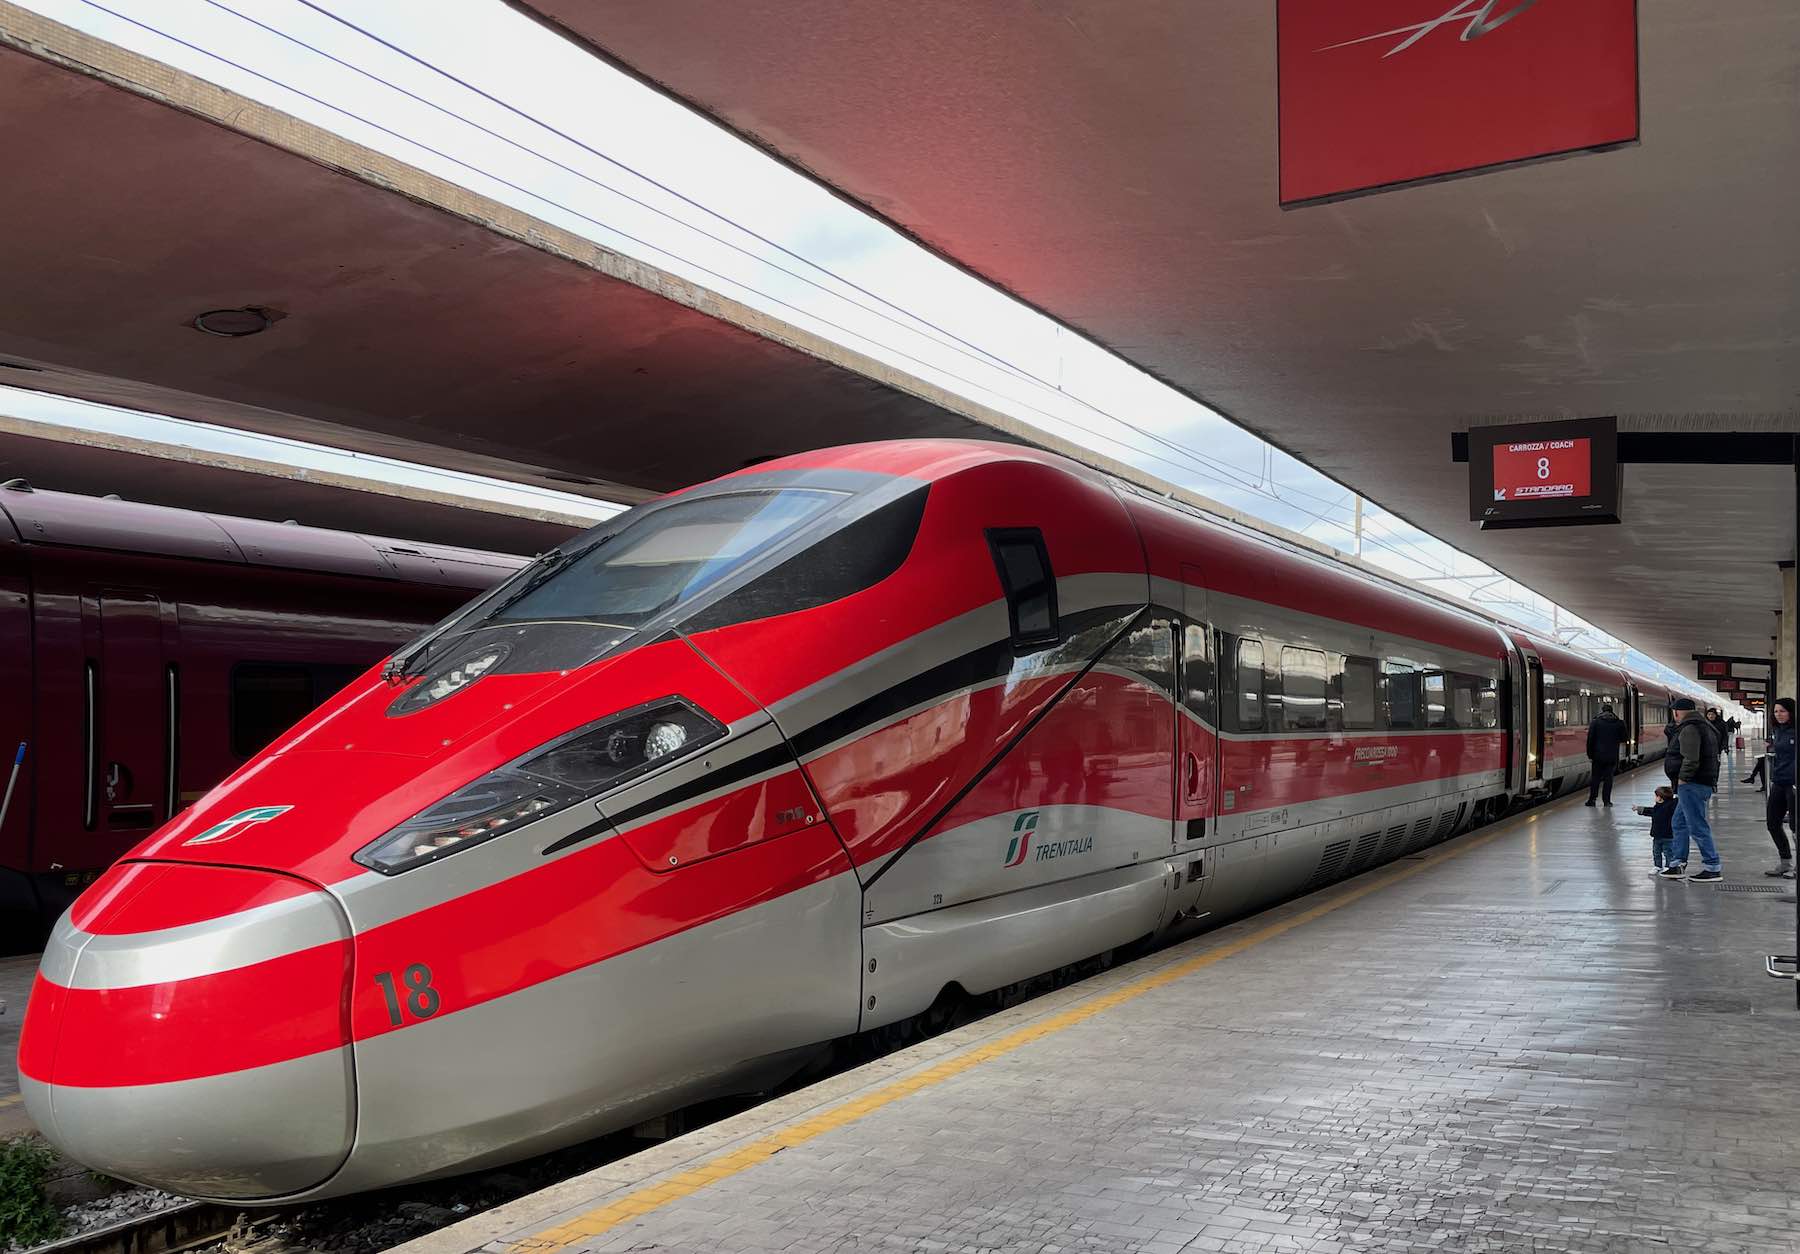 Trenitalia's high-speed train 